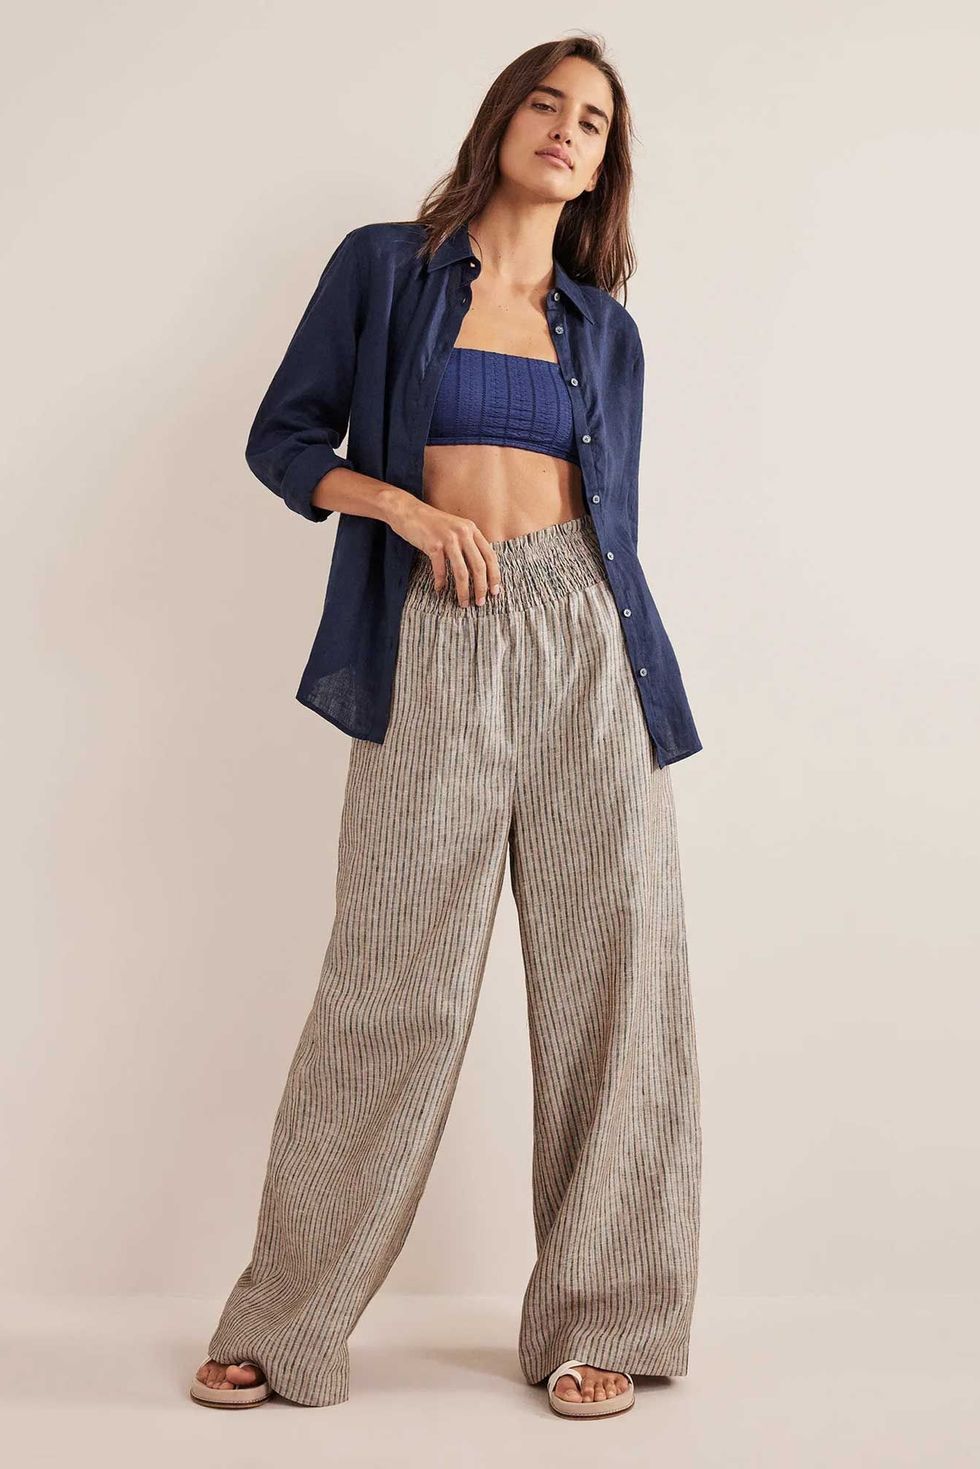 100% linen trousers - Woman